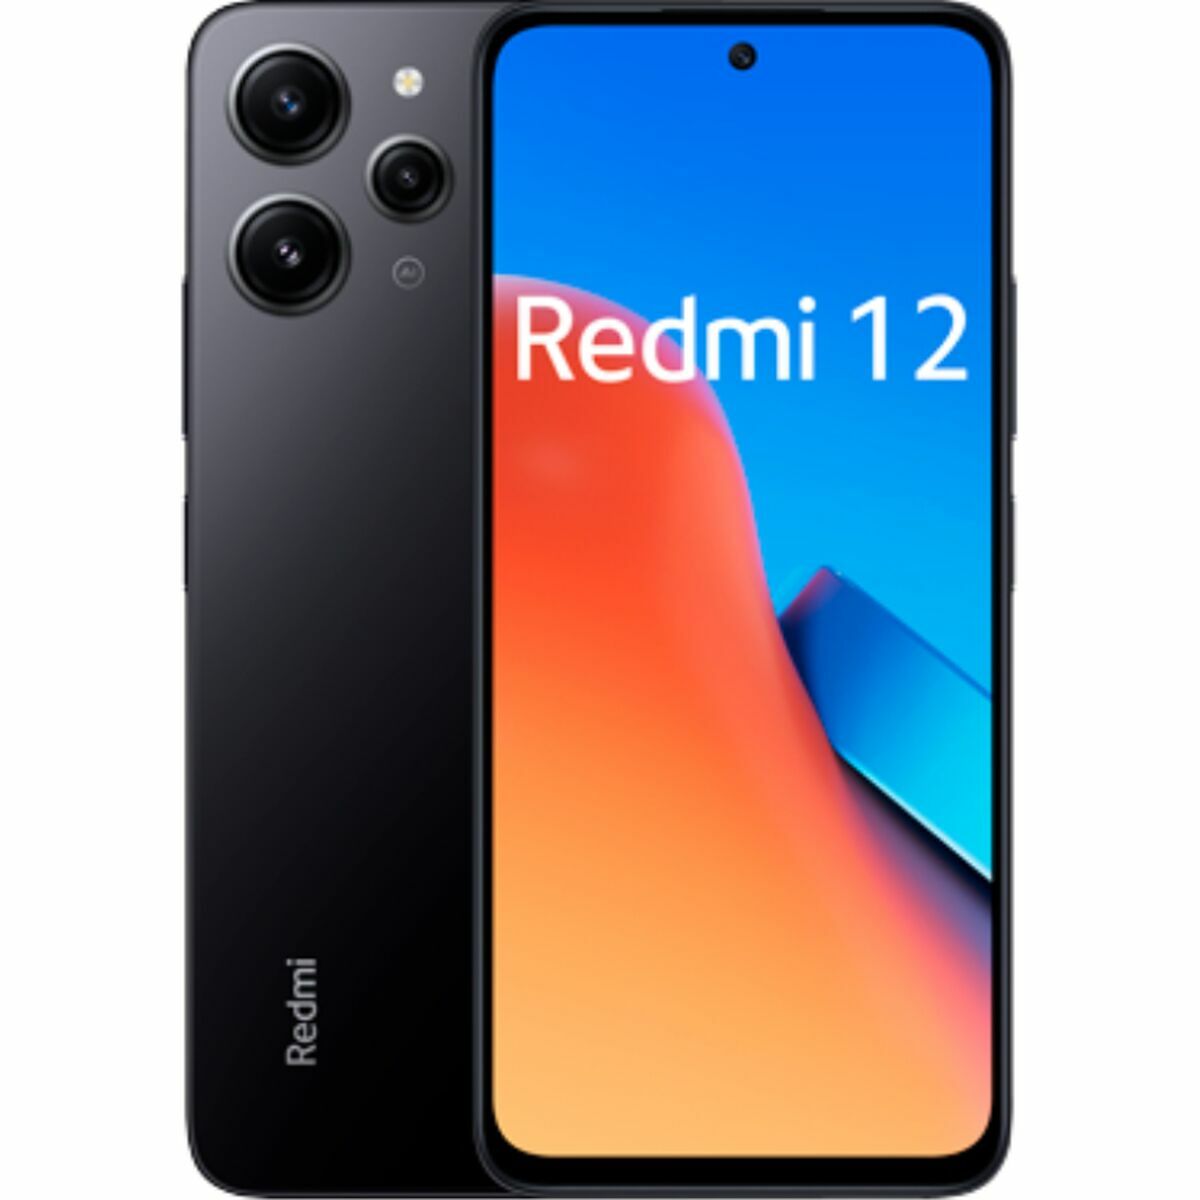 Smartphone Xiaomi Redmi 12 1 TB 128 GB 4 GB RAM Octa Core Blue Black